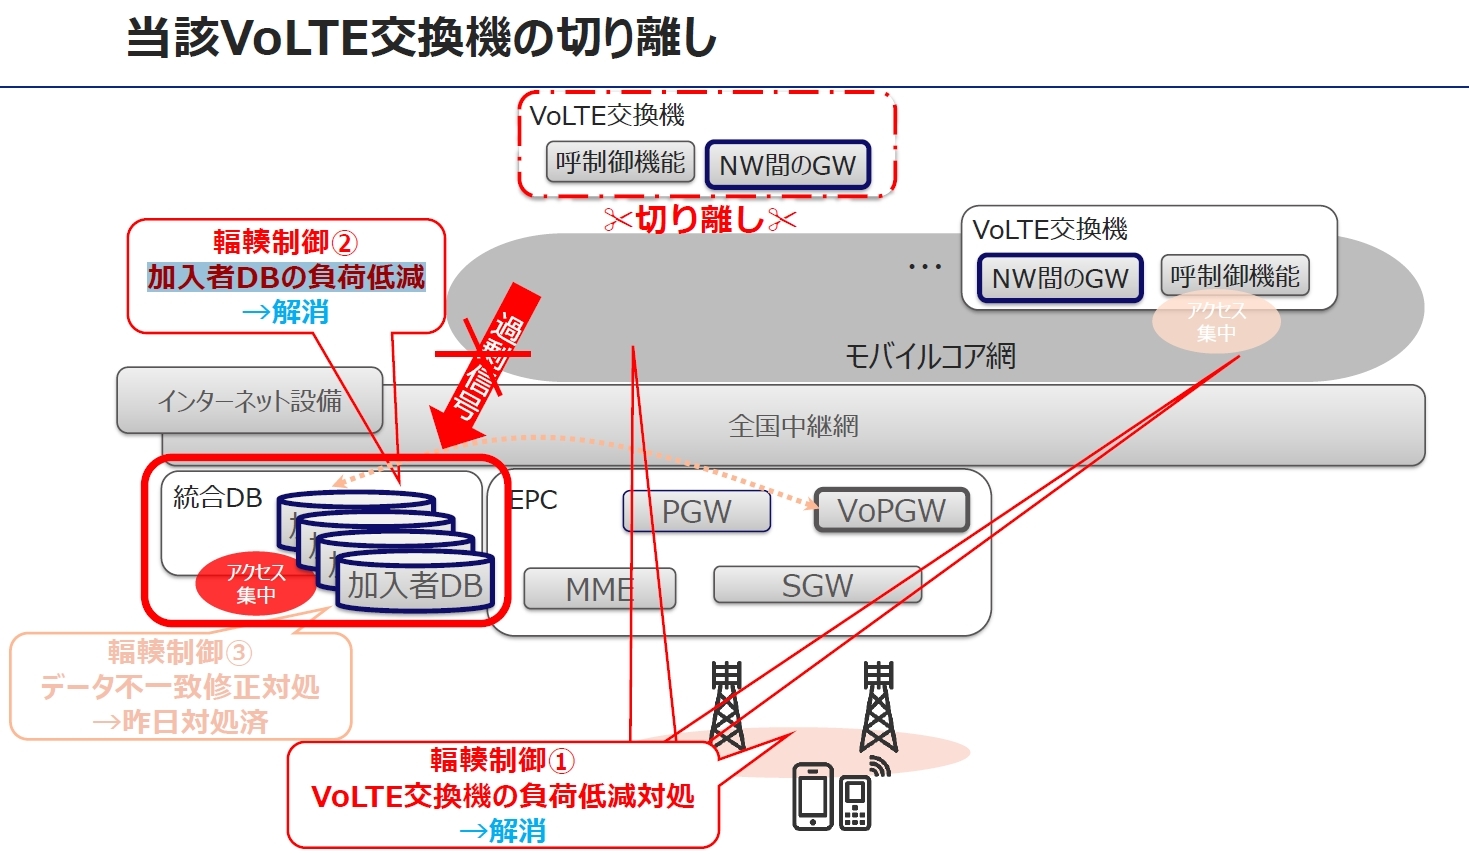 VoLTE交換機と加入者DB間の接続を遮断して過剰通信への追加対策を講じたとする